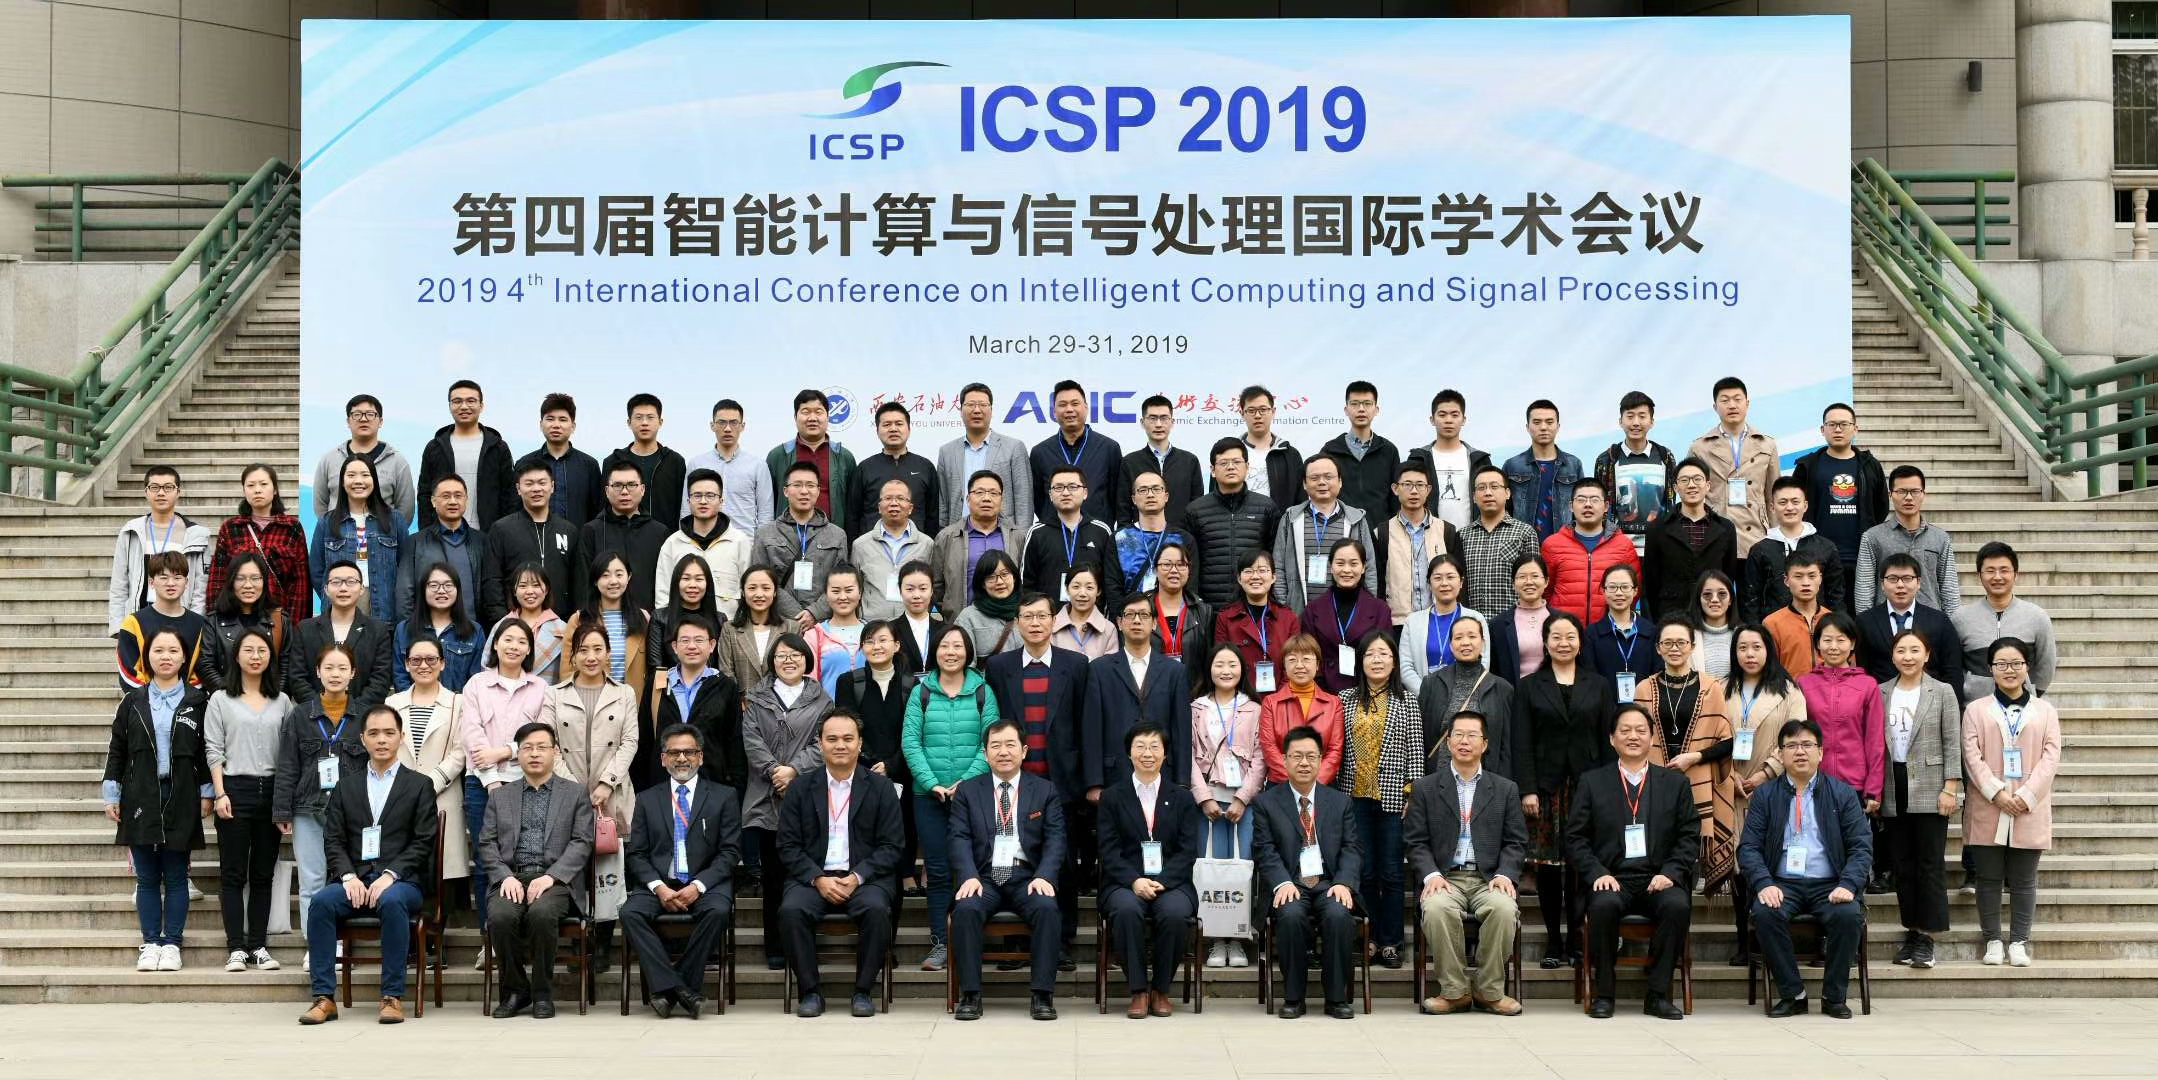 ICSP 2019大合照.jpg